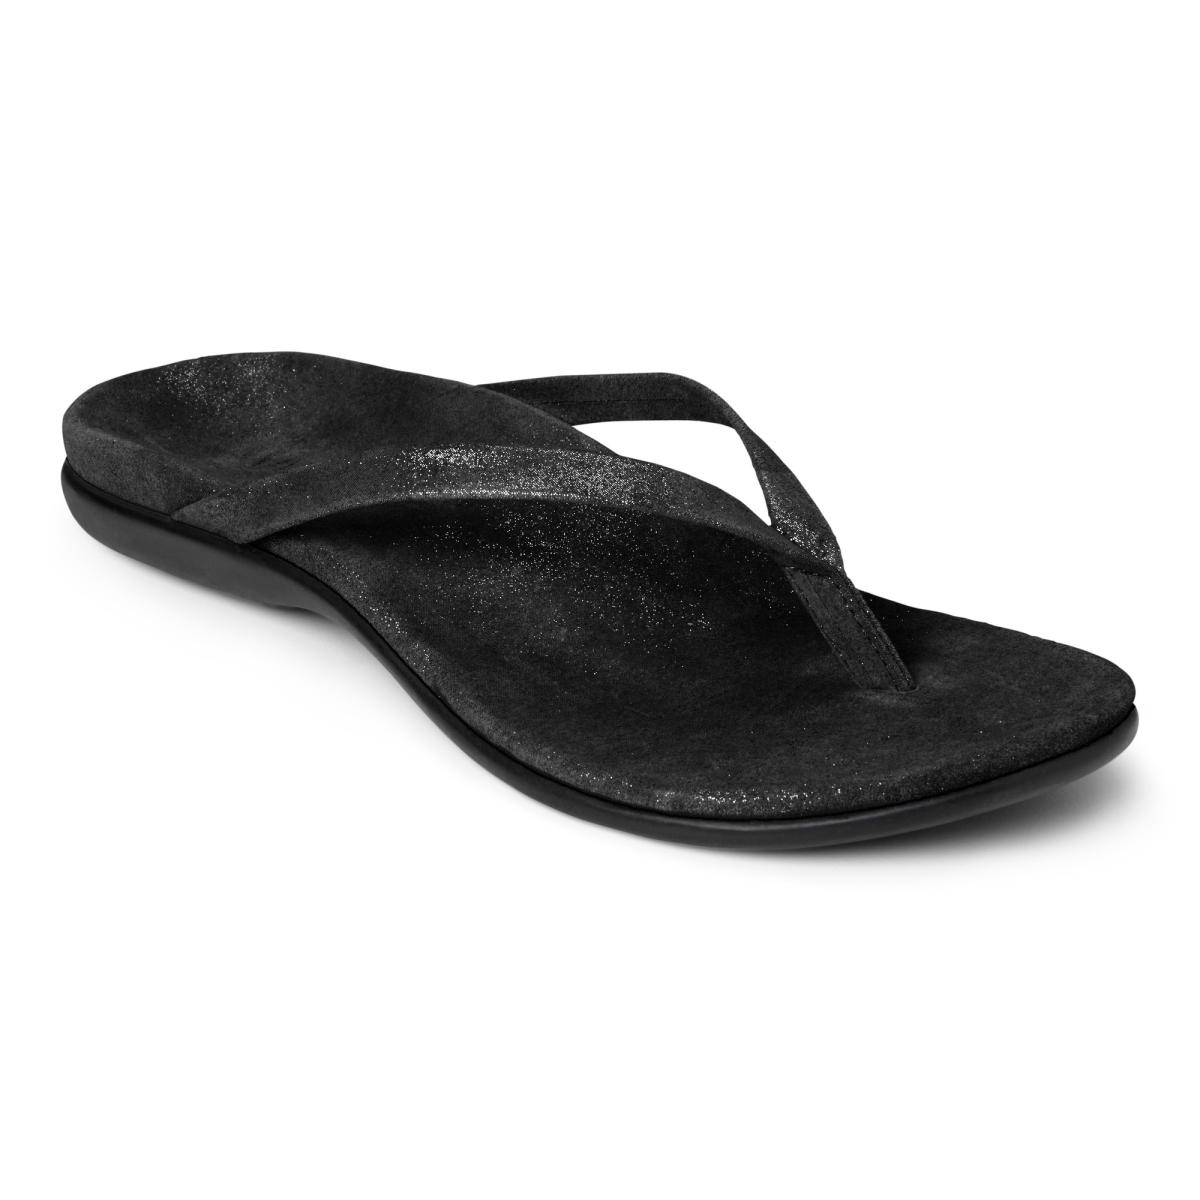 vionic black flip flops